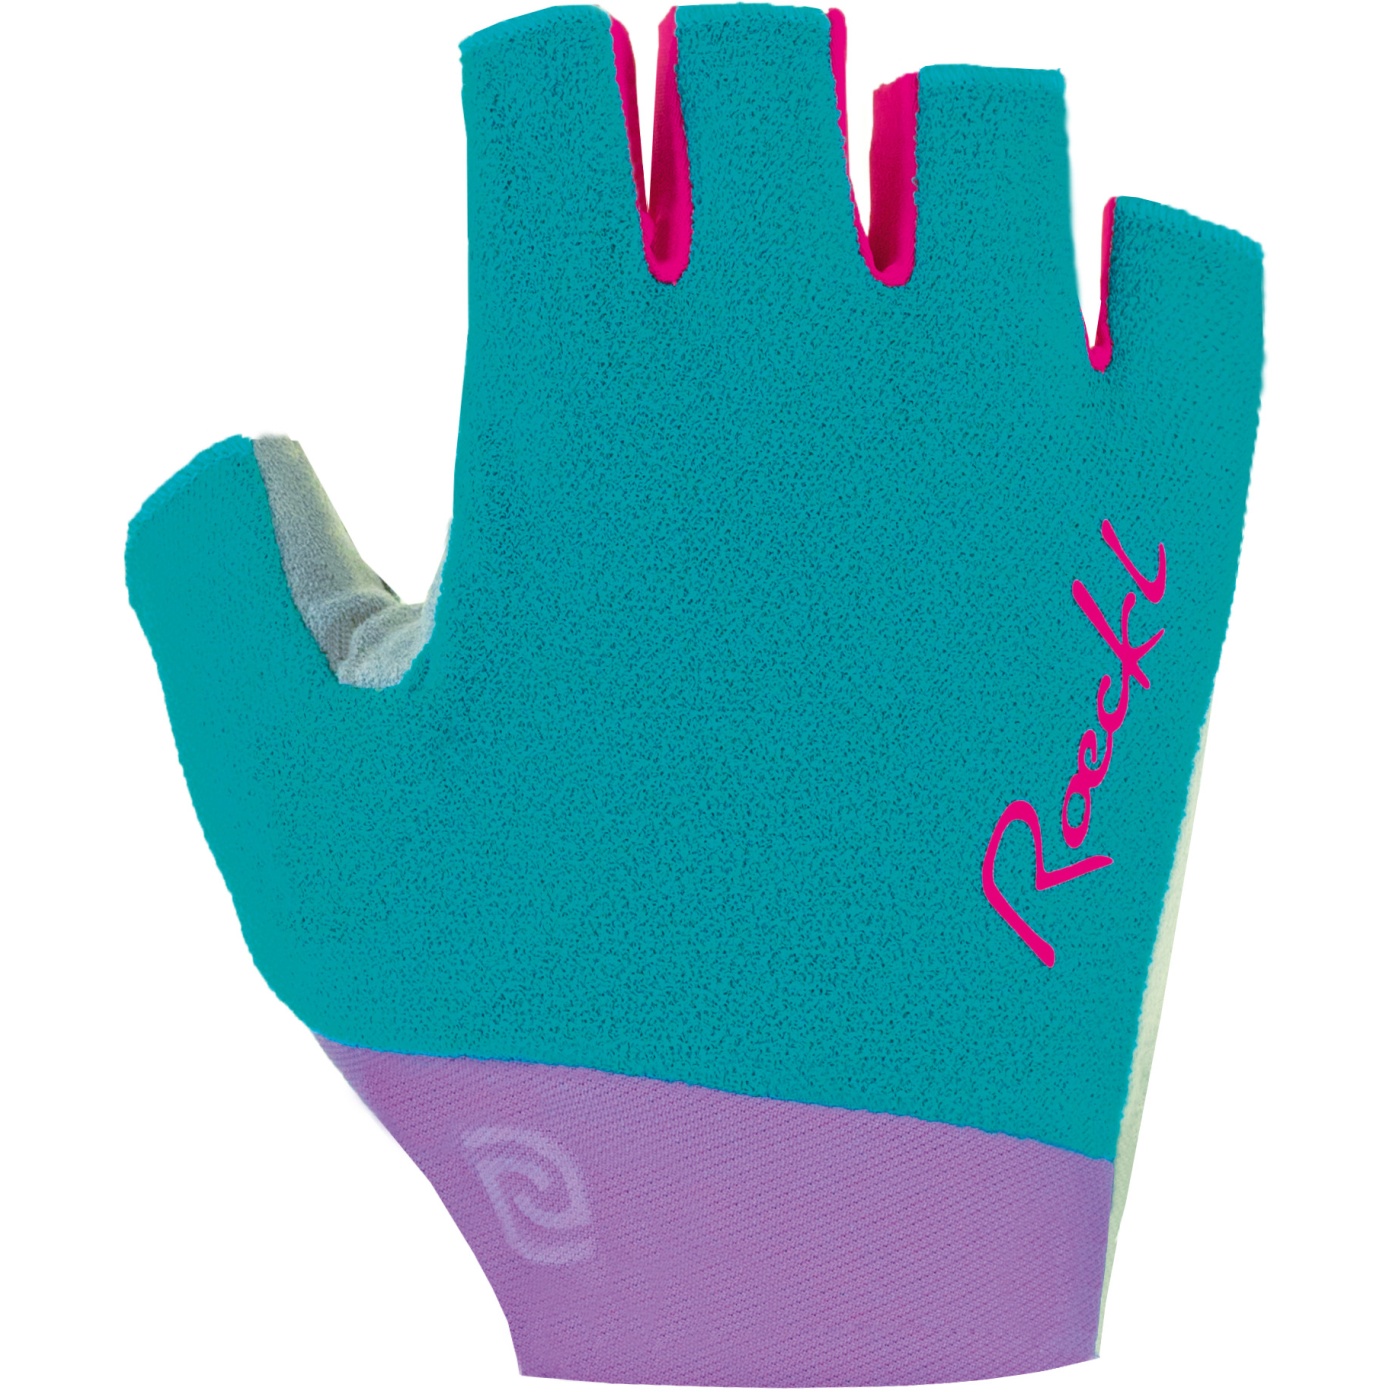 Picture of Roeckl Sports Deleni Cycling Gloves Women - borneo 5230